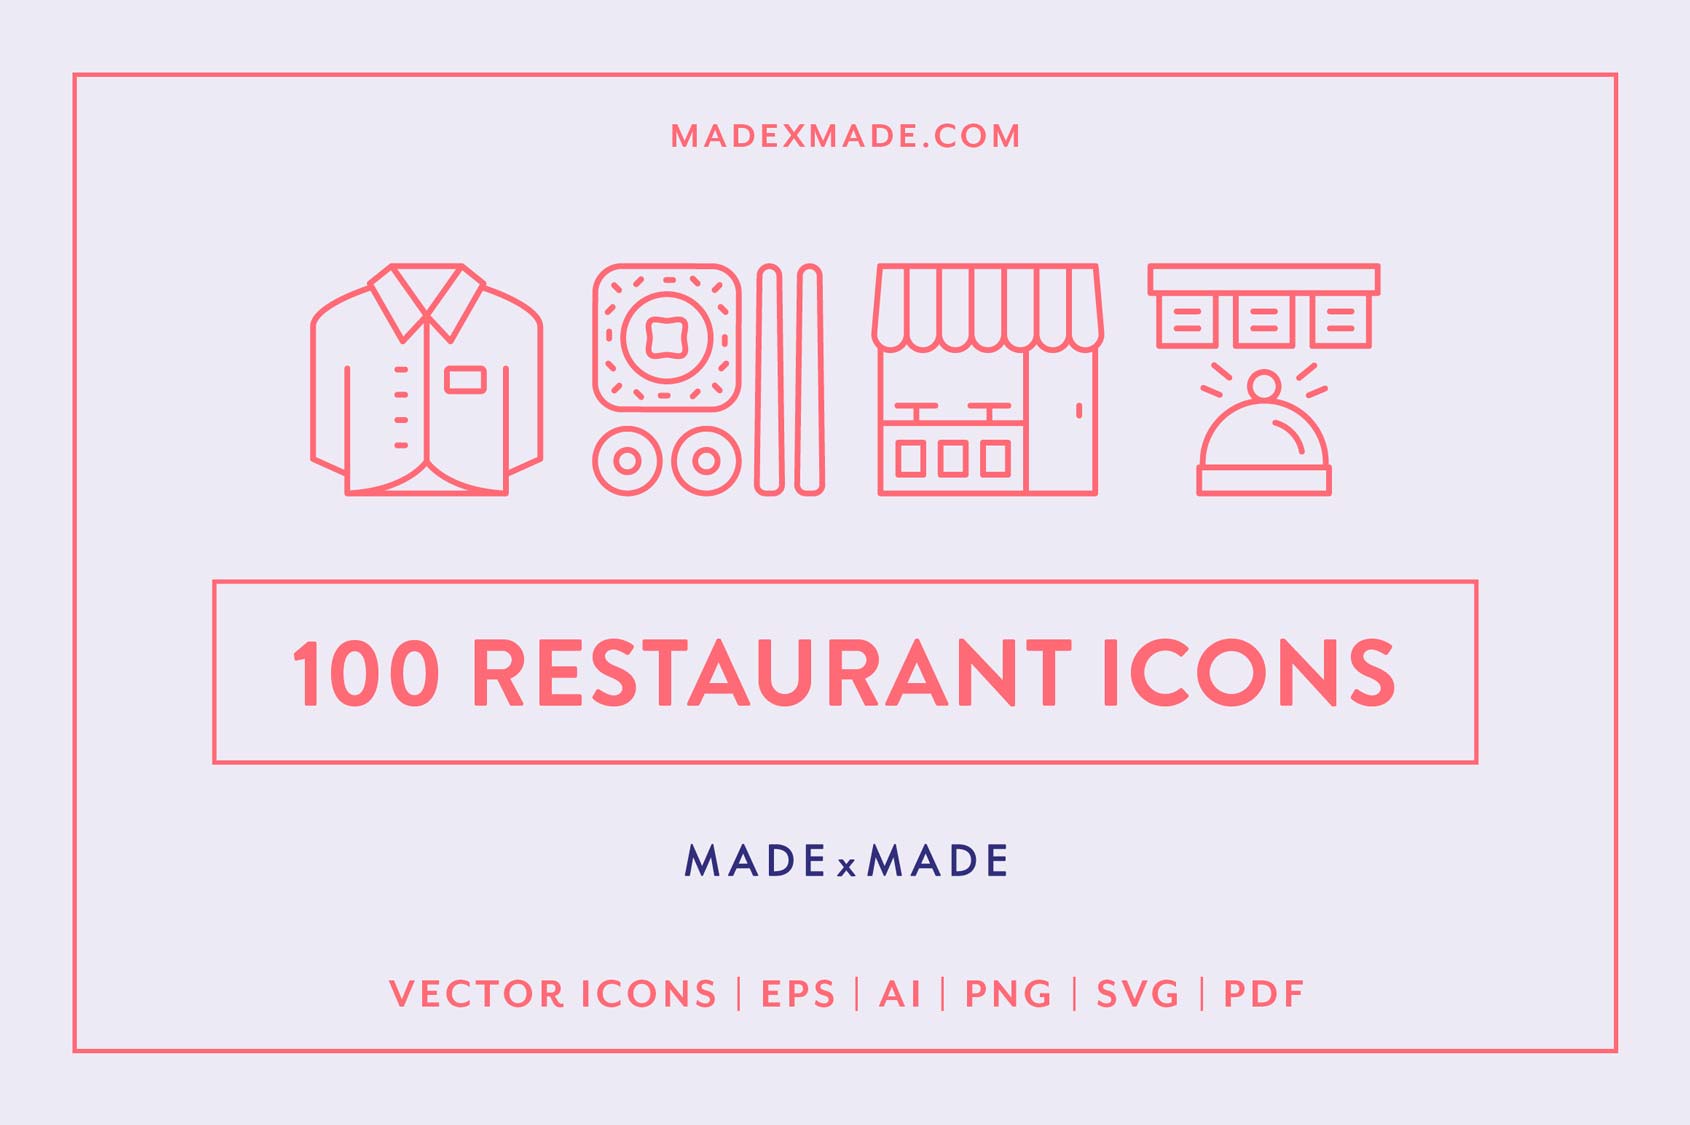 made x made icons restaurant